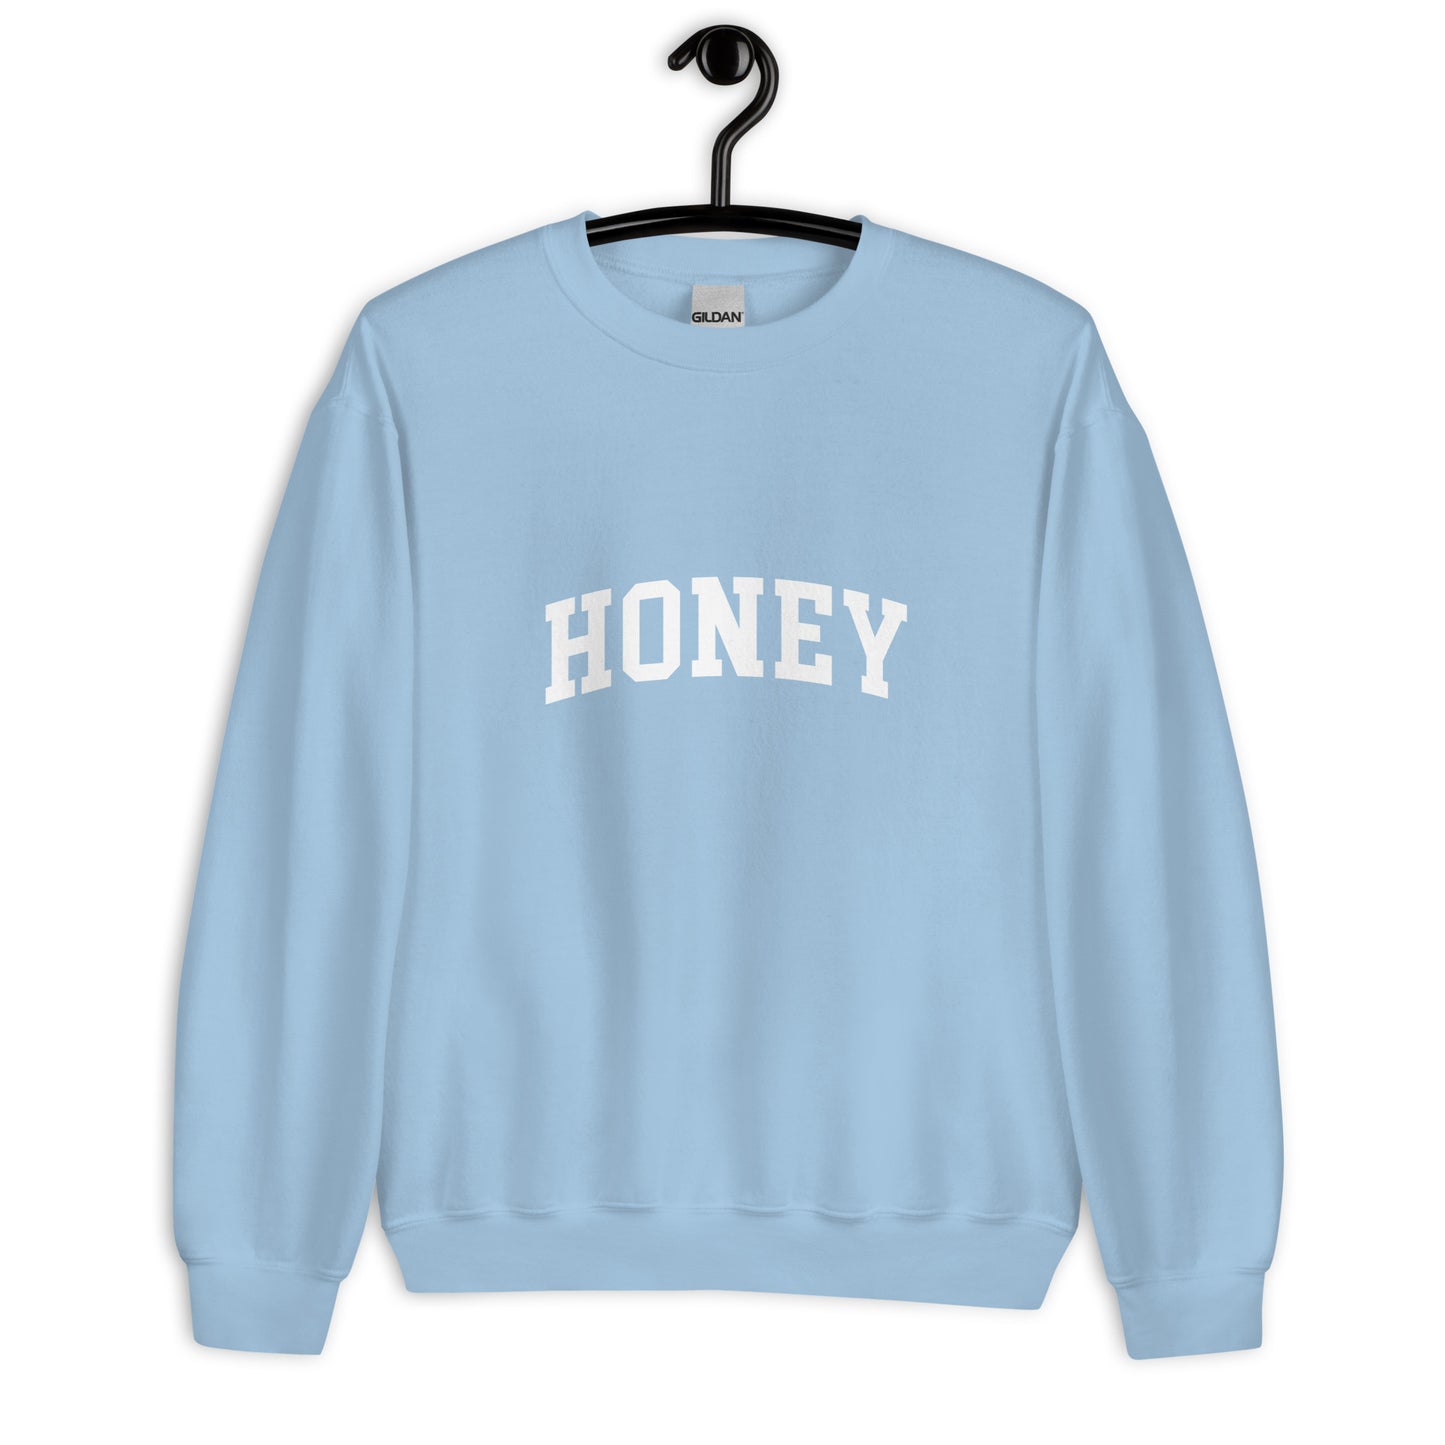 Honey Sweatshirt - Arched Font